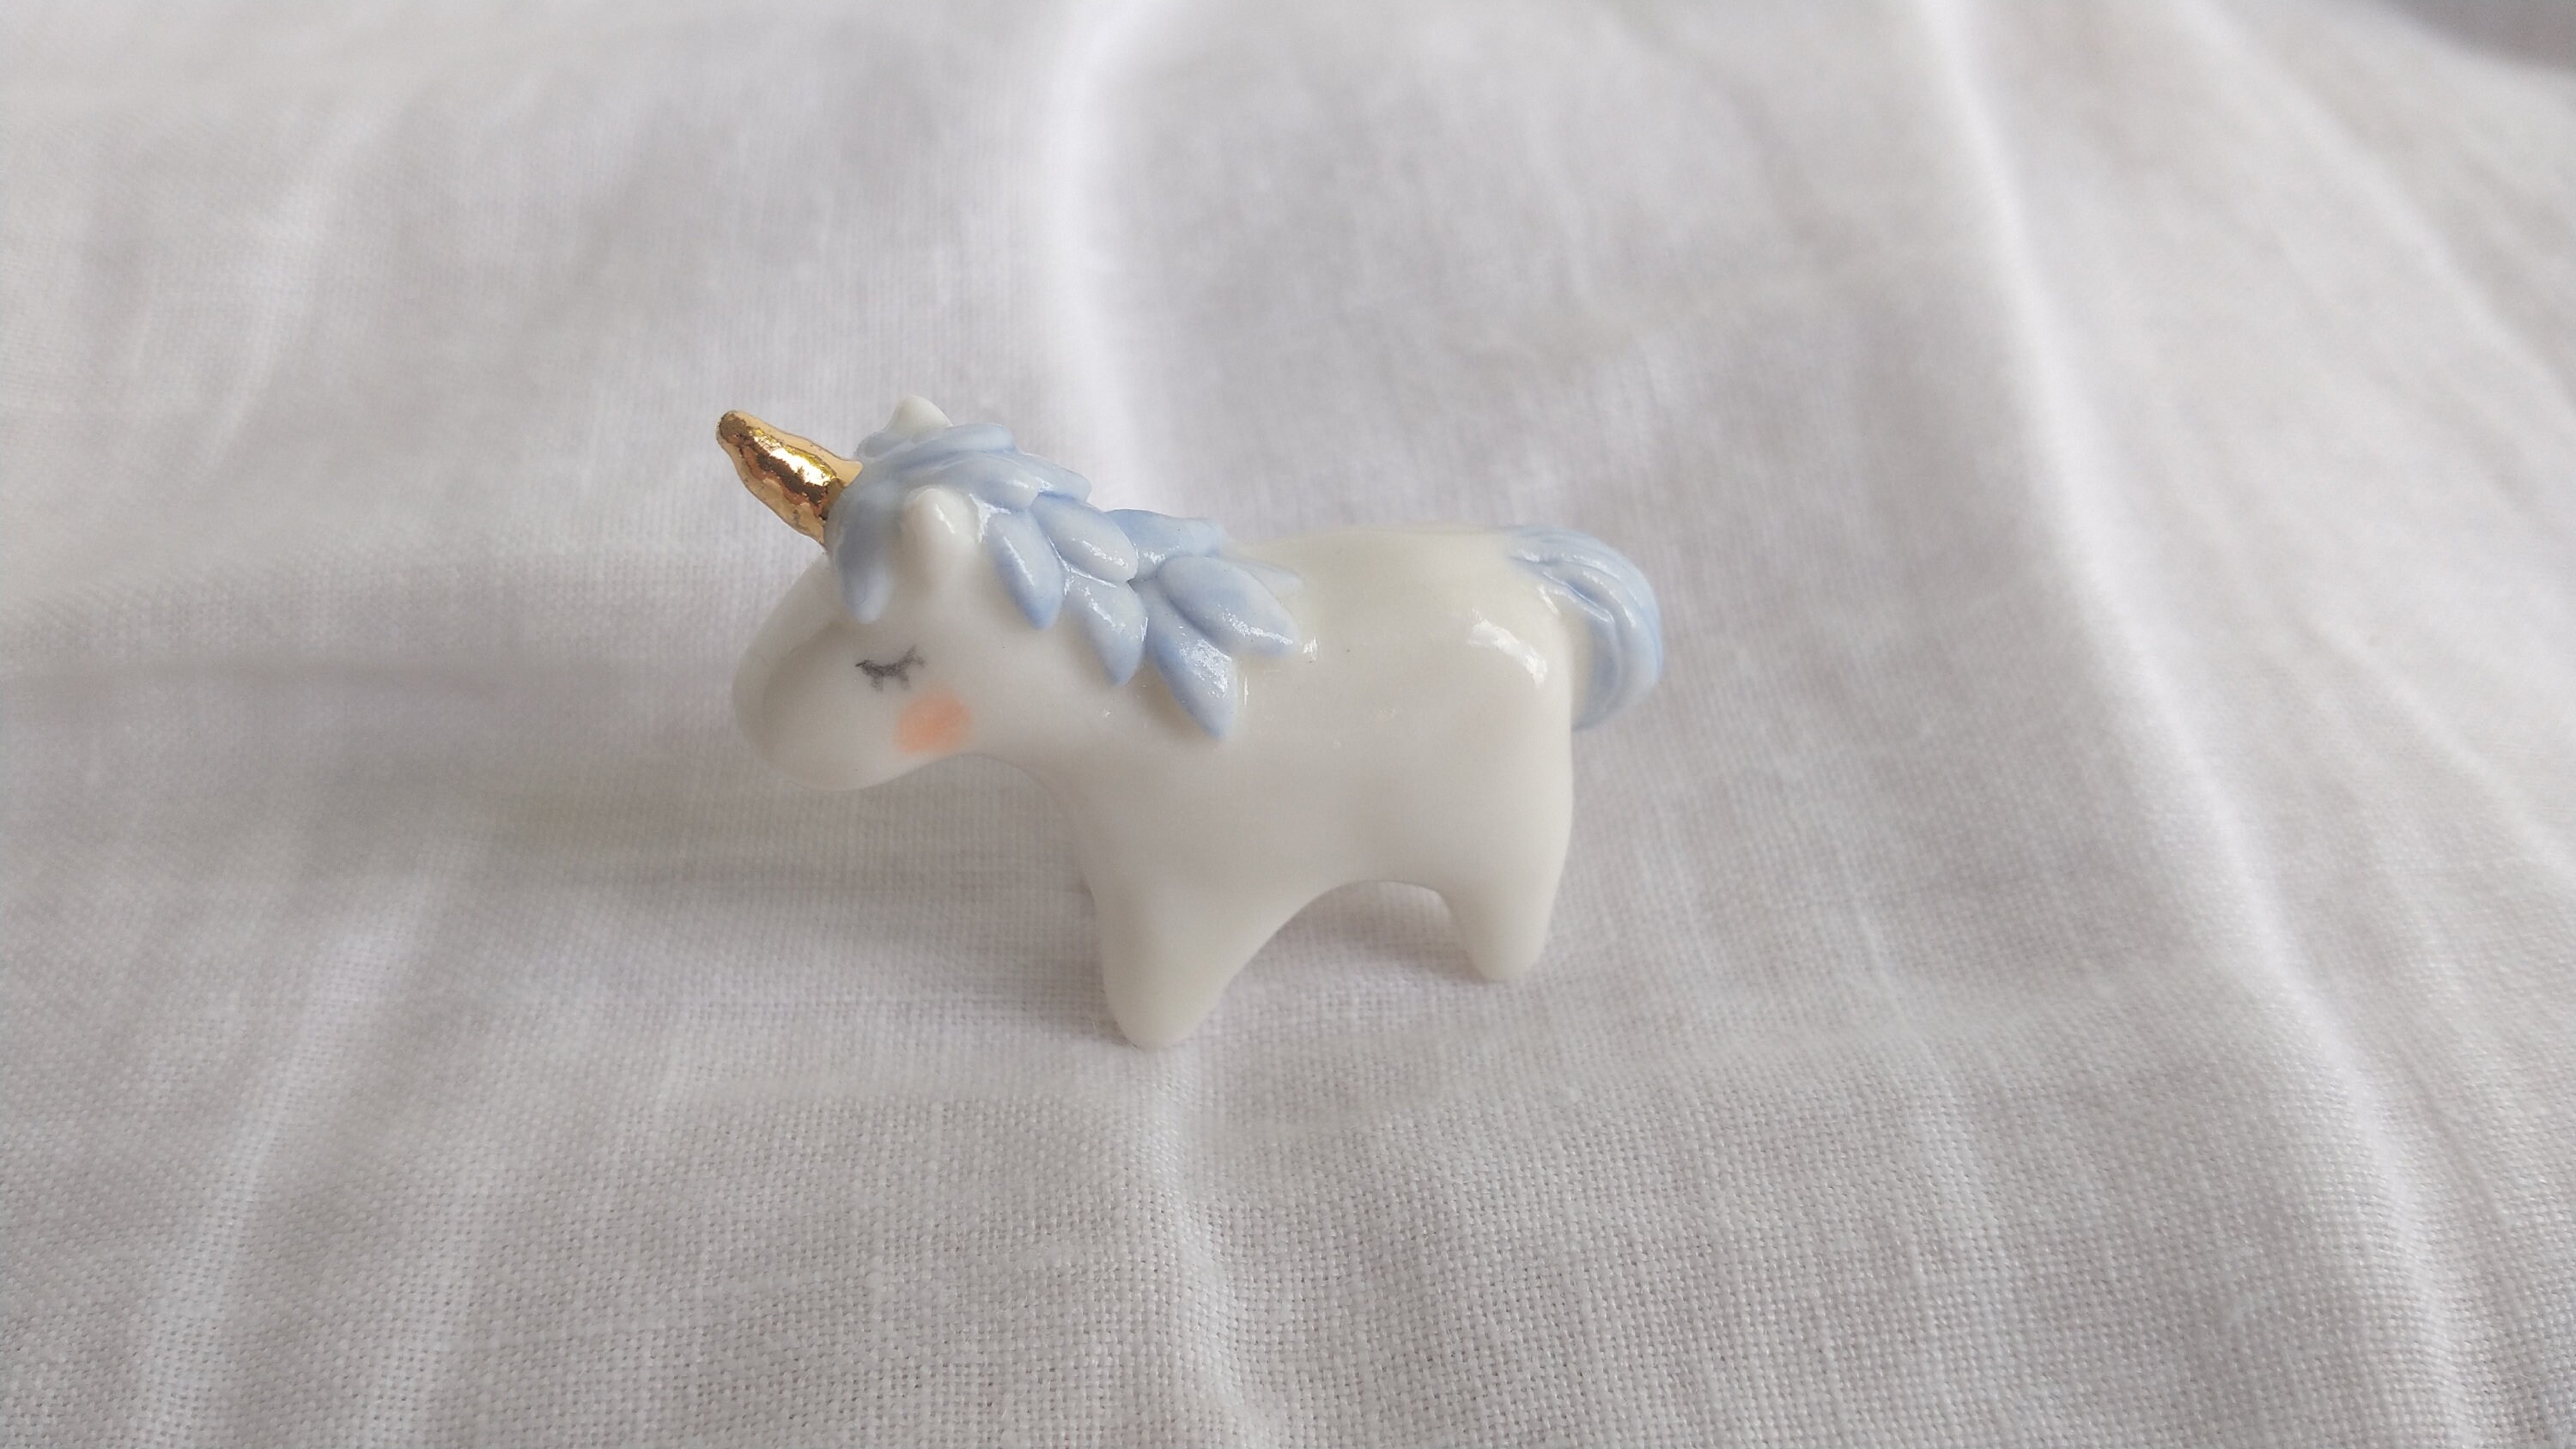 Kawaii Unicorn Charm, Polymer Clay Charms, Unicorn Keychain, Unicorn  Keyring, Unicorn Gifts, Unicorn Jewelry, Stitch Marker, Christmas Gift 